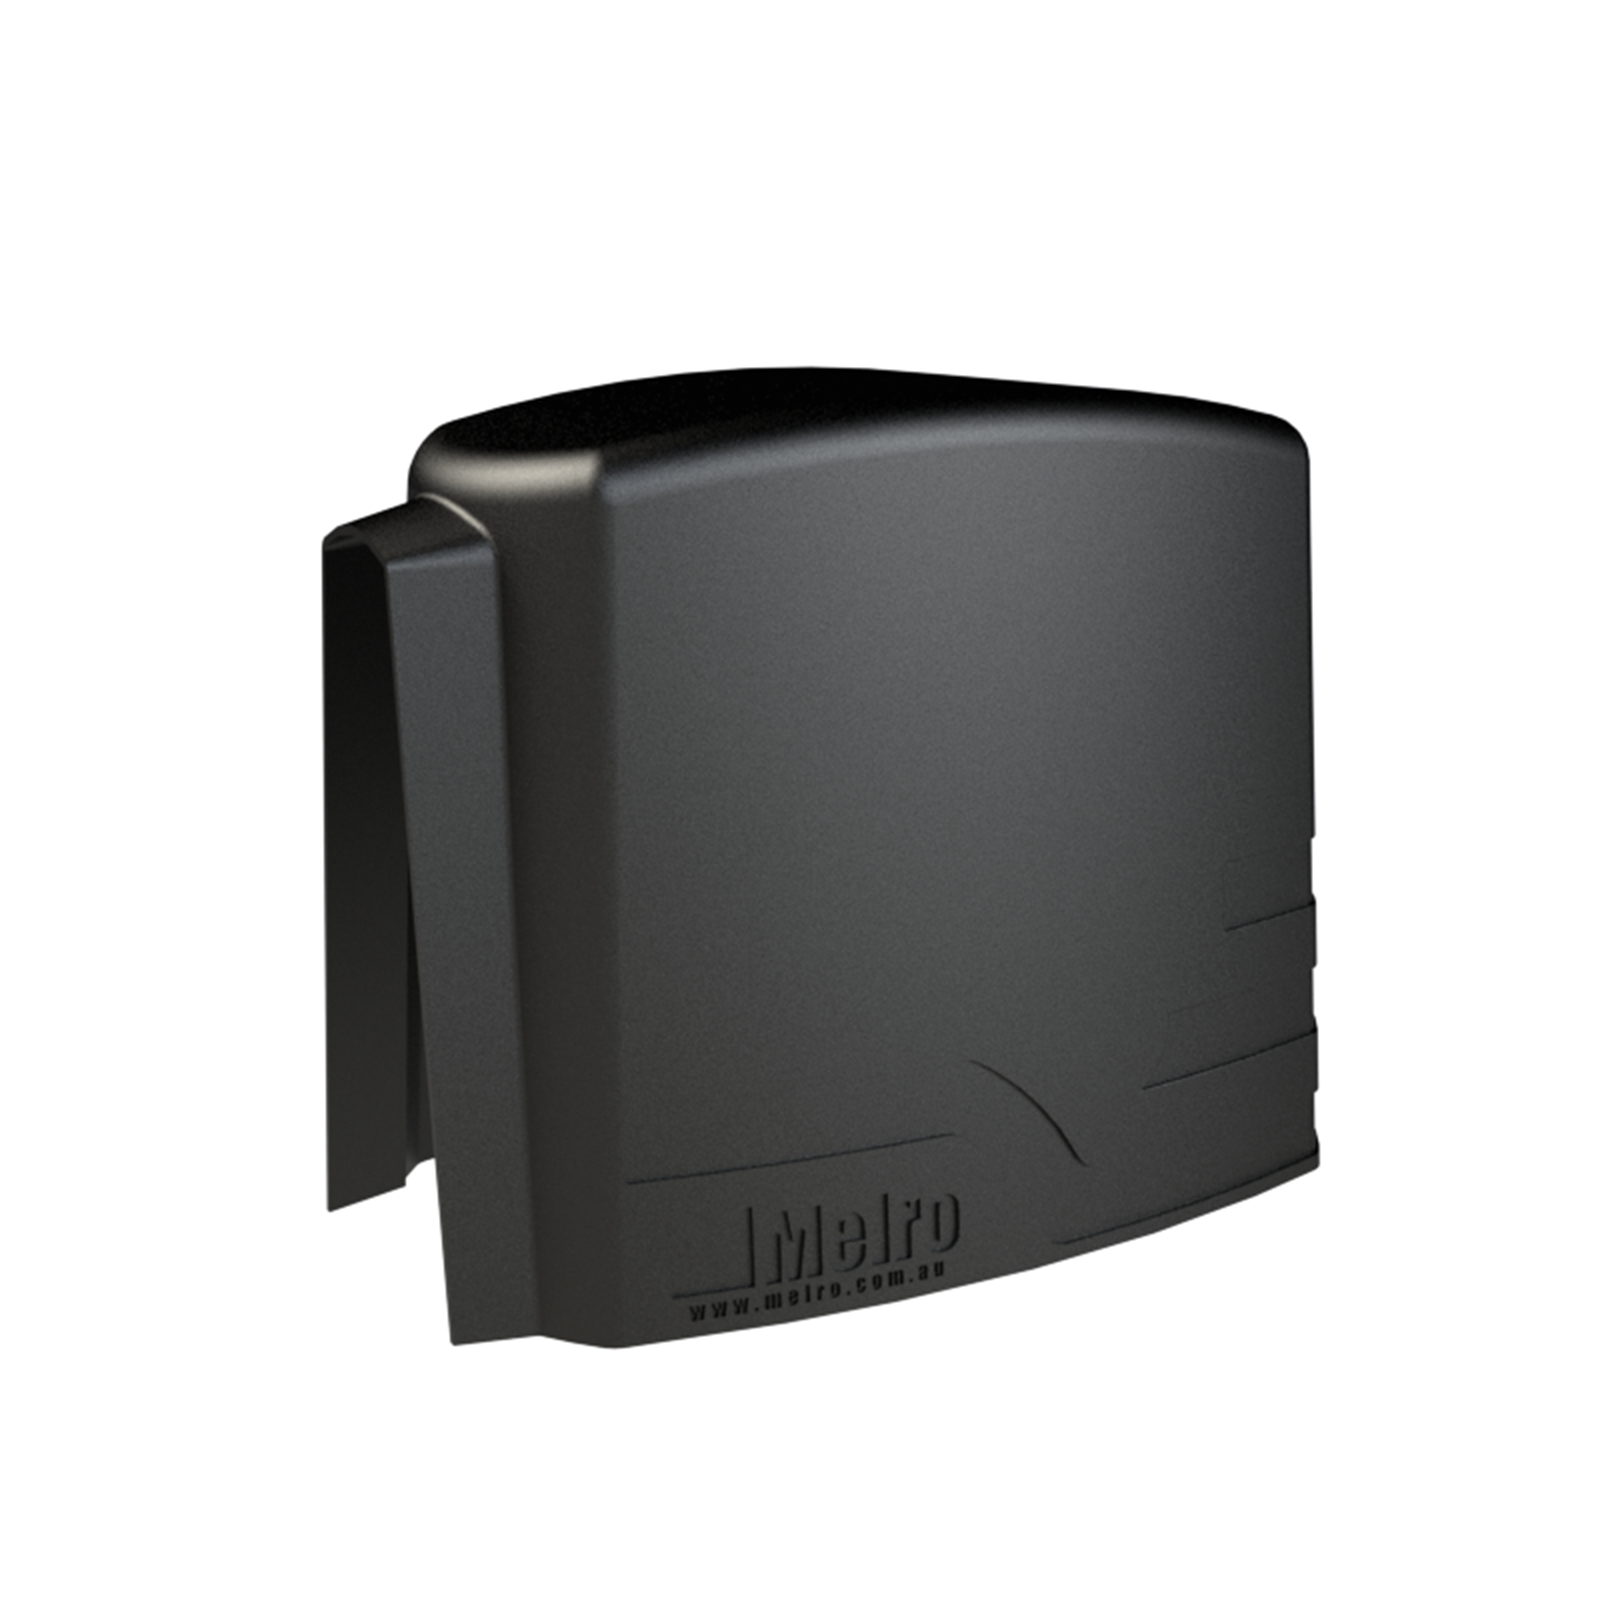 Melro 61 x 48 x 35cm Water Pump Cover - Black